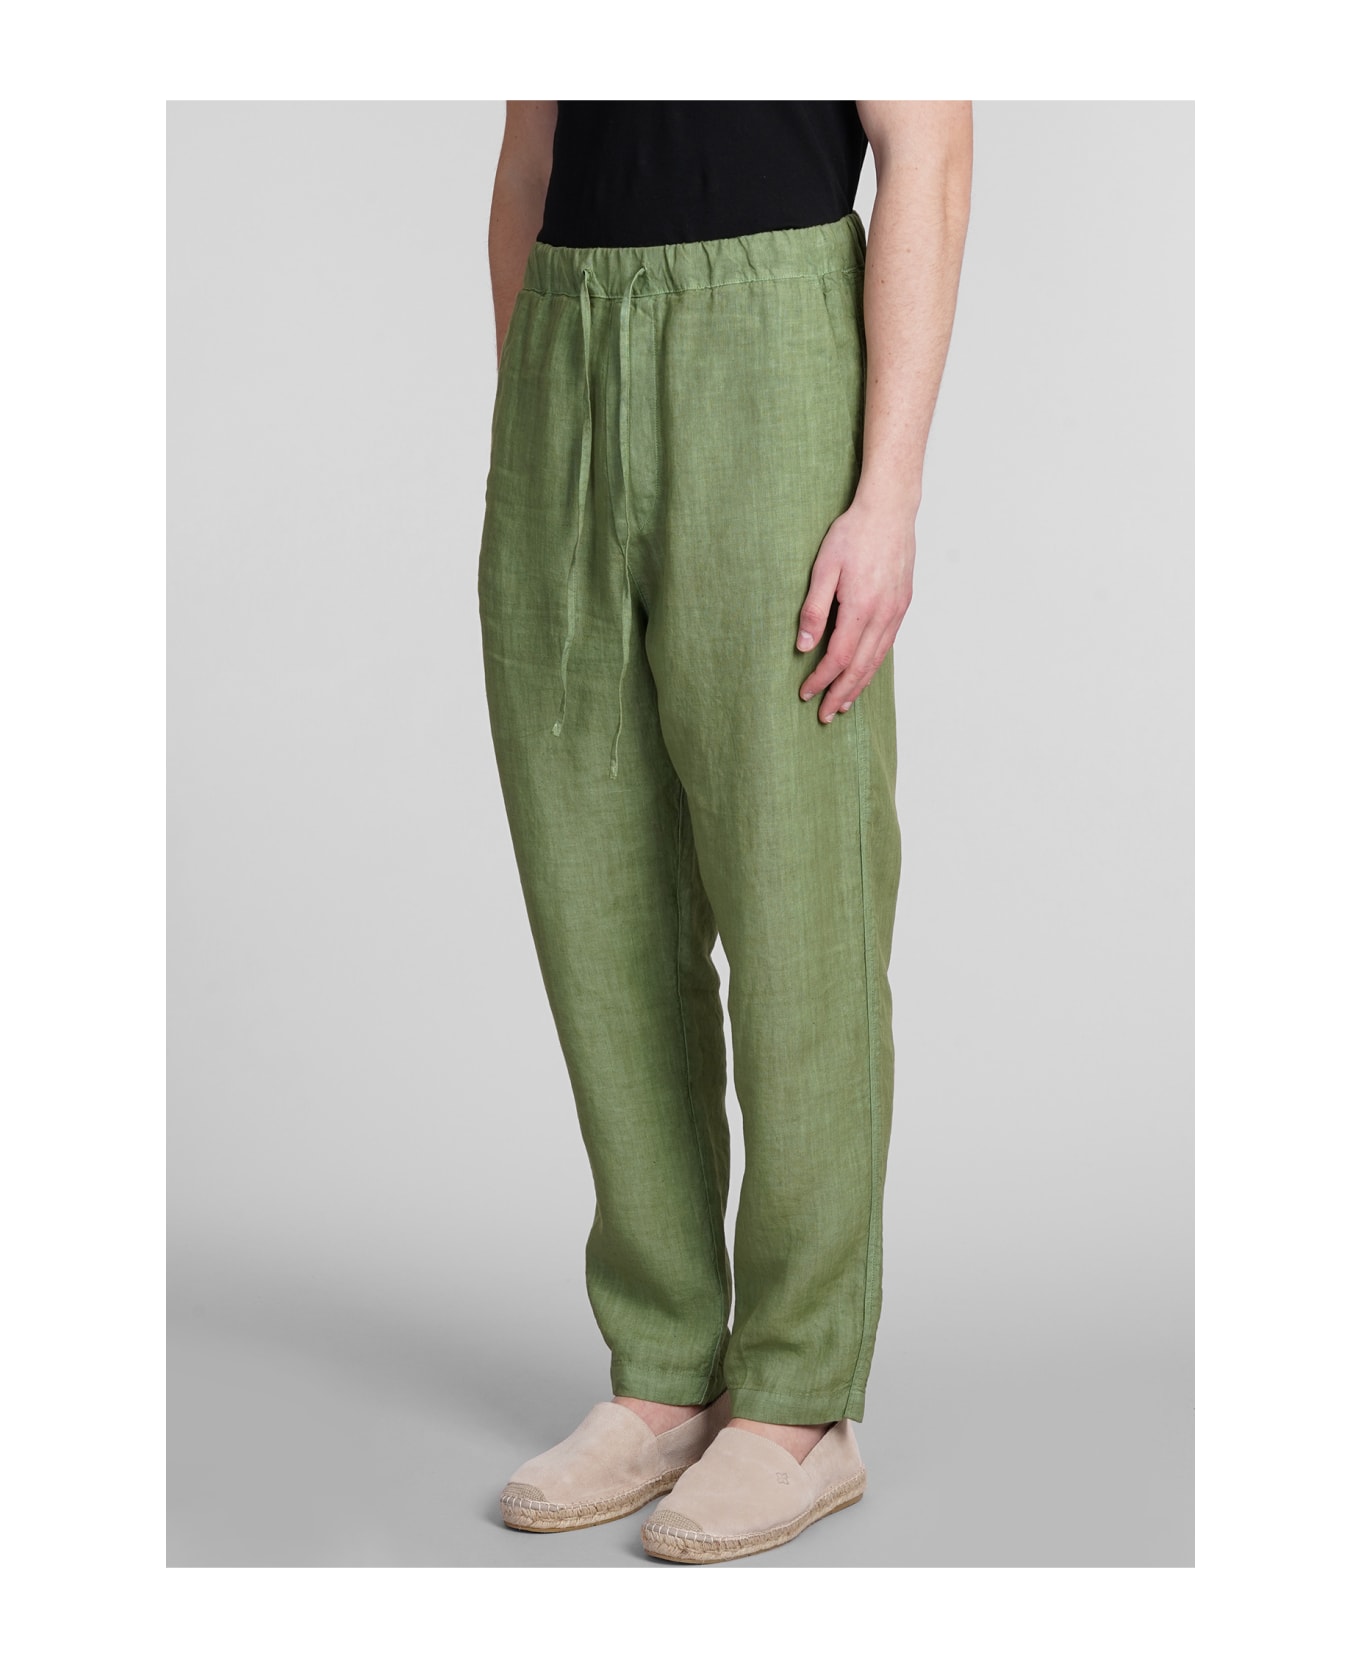 120% Lino Pants In Green Linen - green